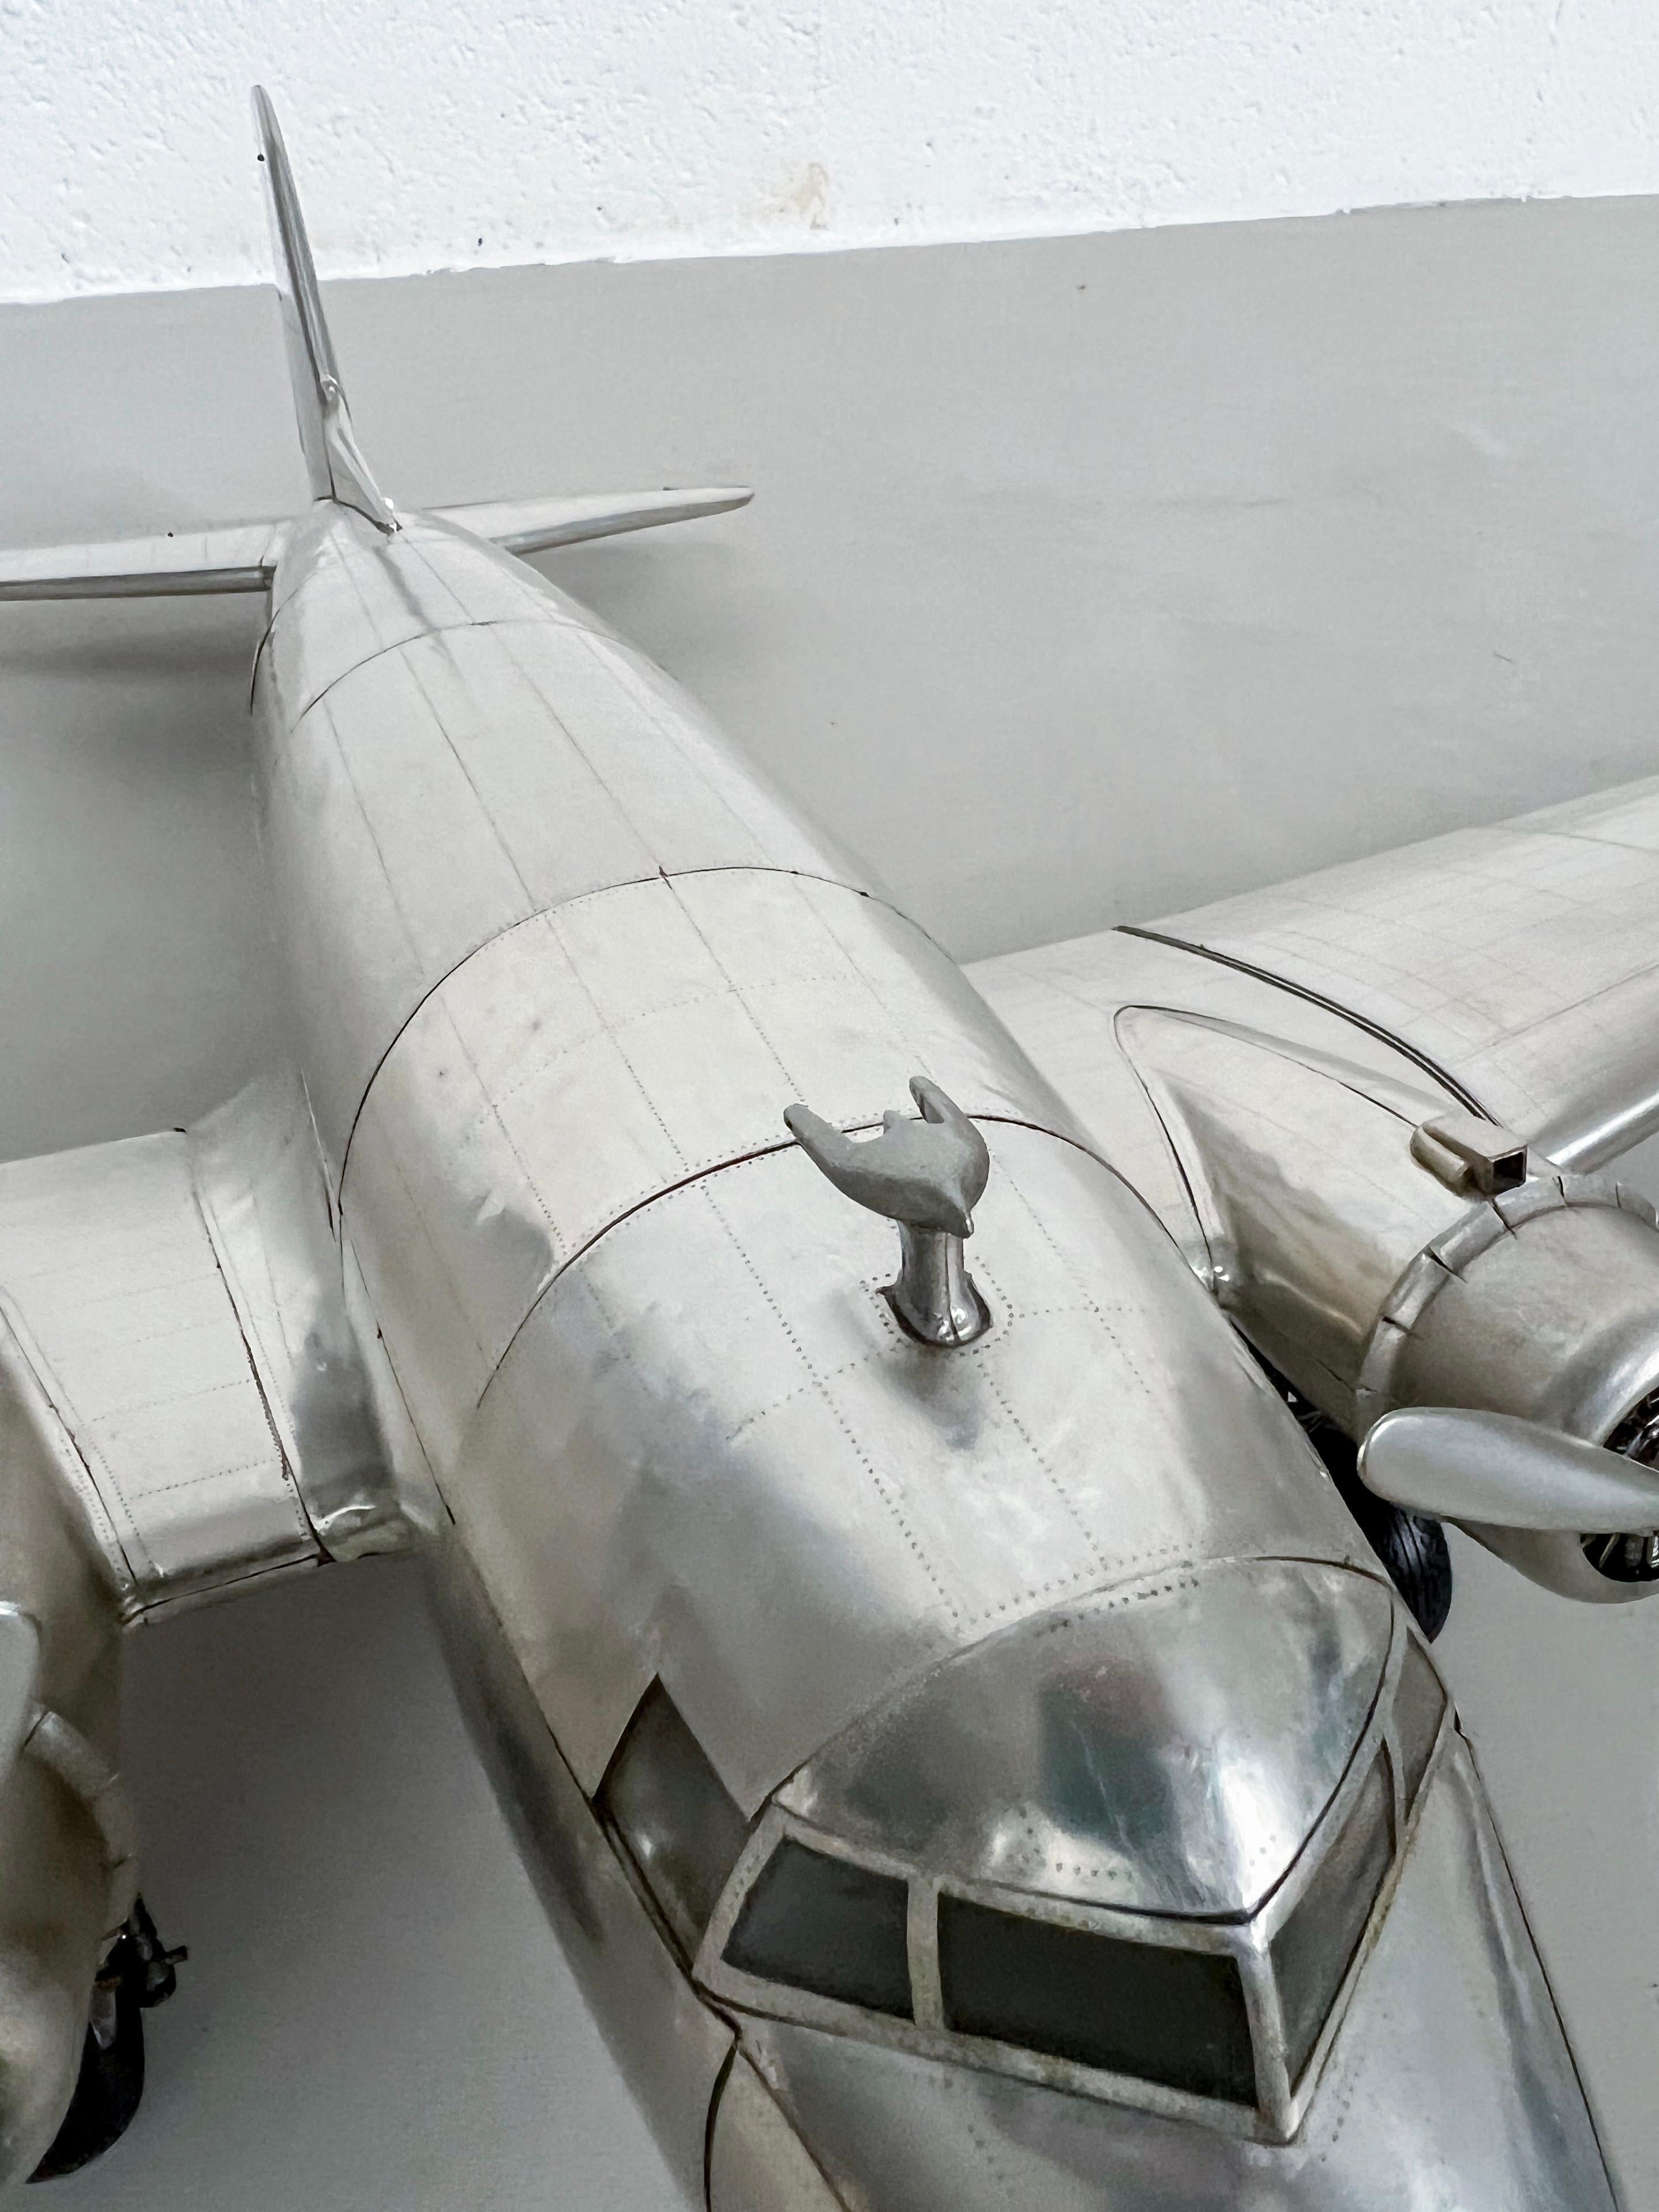 Modern Douglas Dc-3 Aircraft Model, Big Size, Richly Detailed, Streamlined Metal Plane